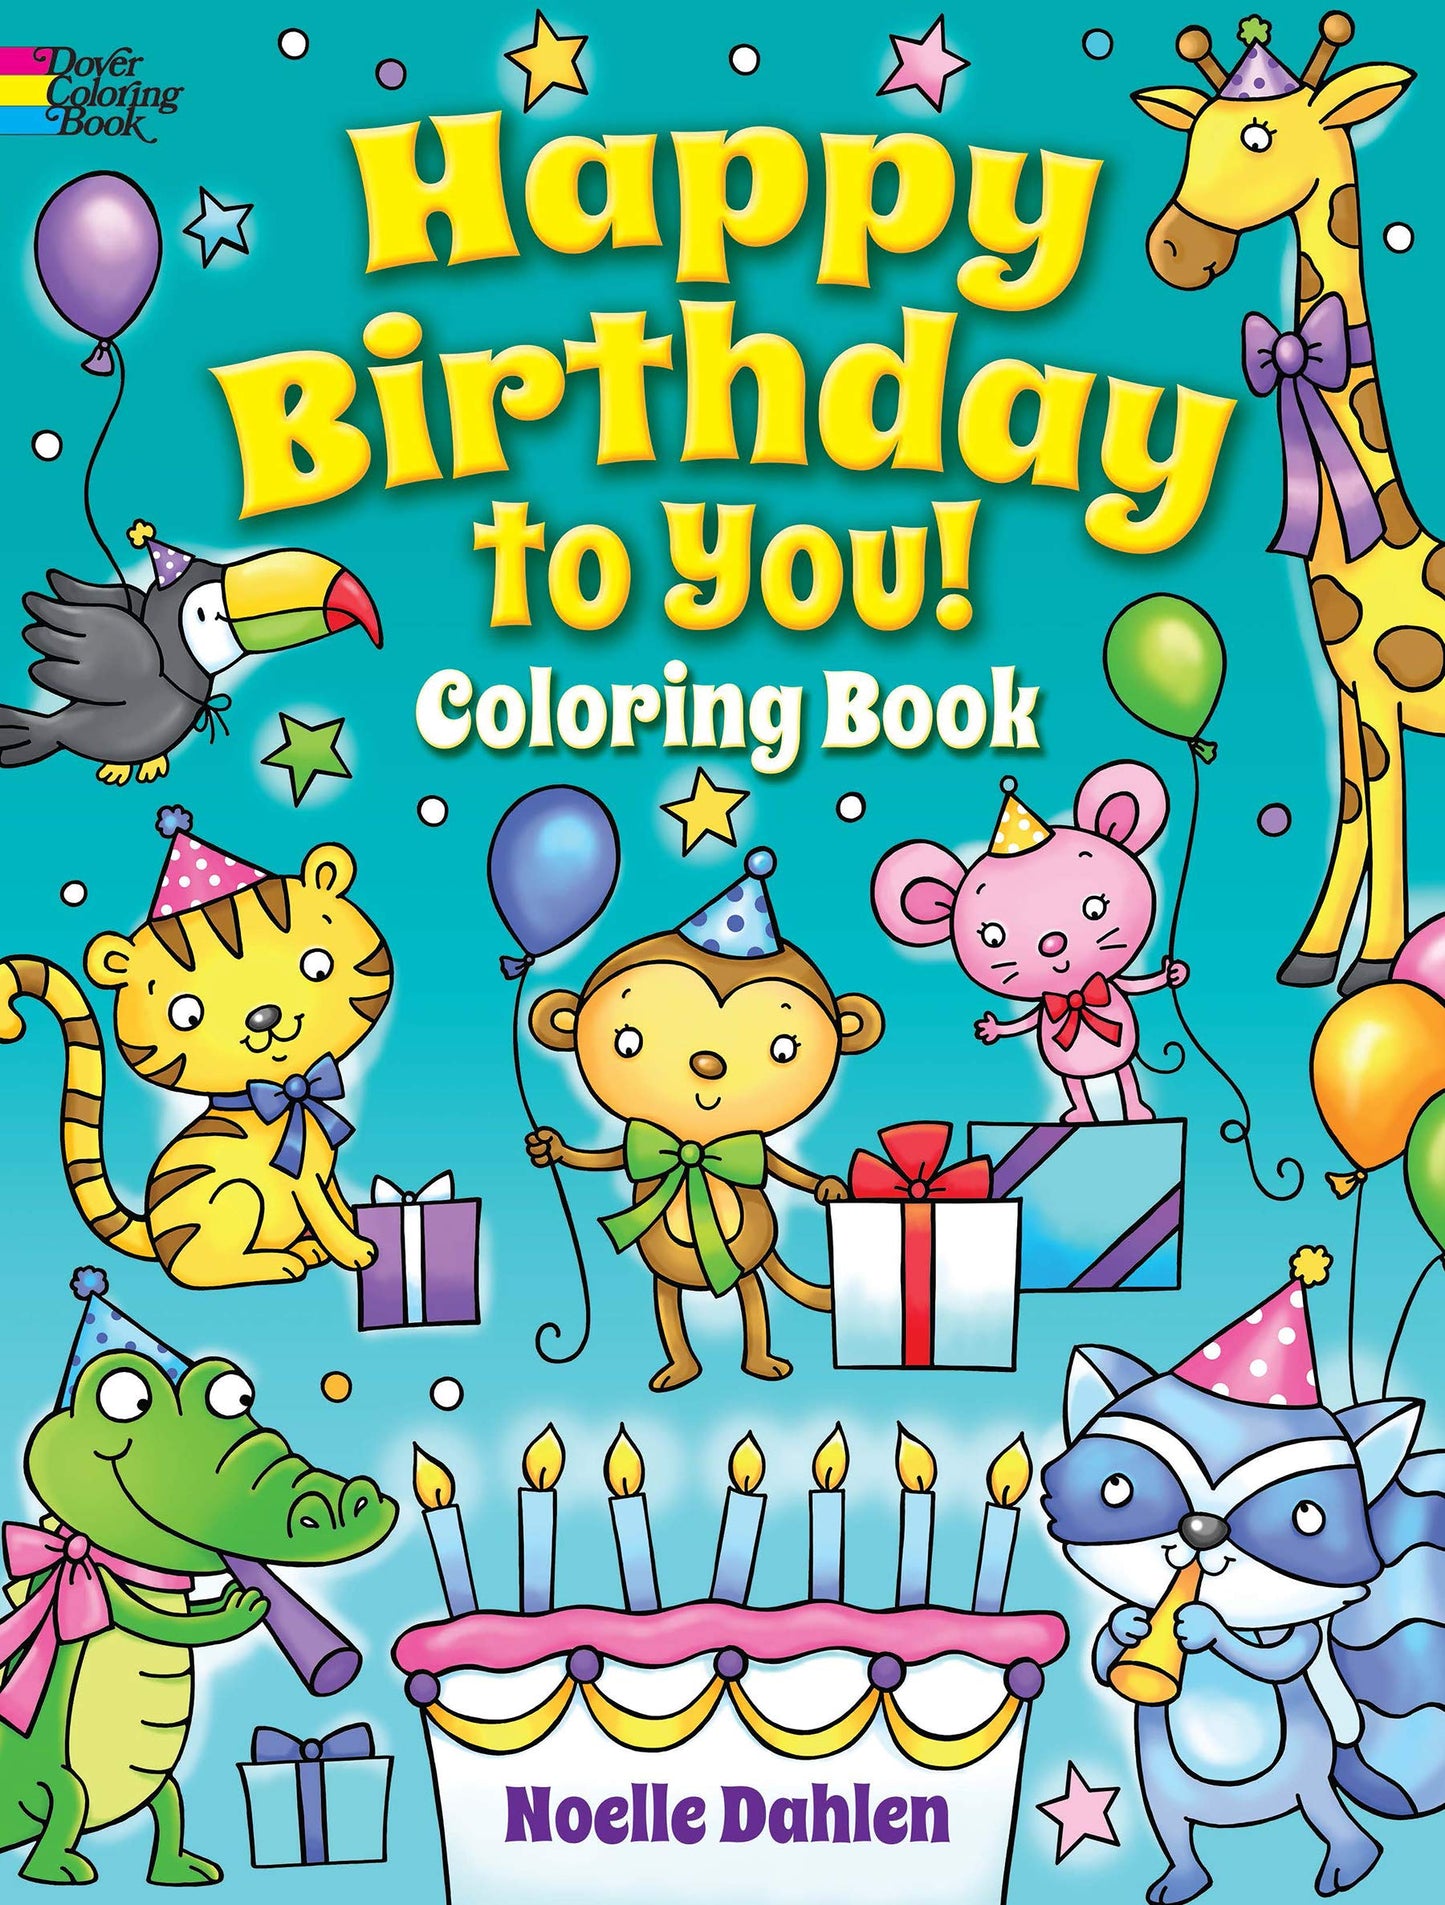 Birthday Celebration Set - Coloring Book + Tee